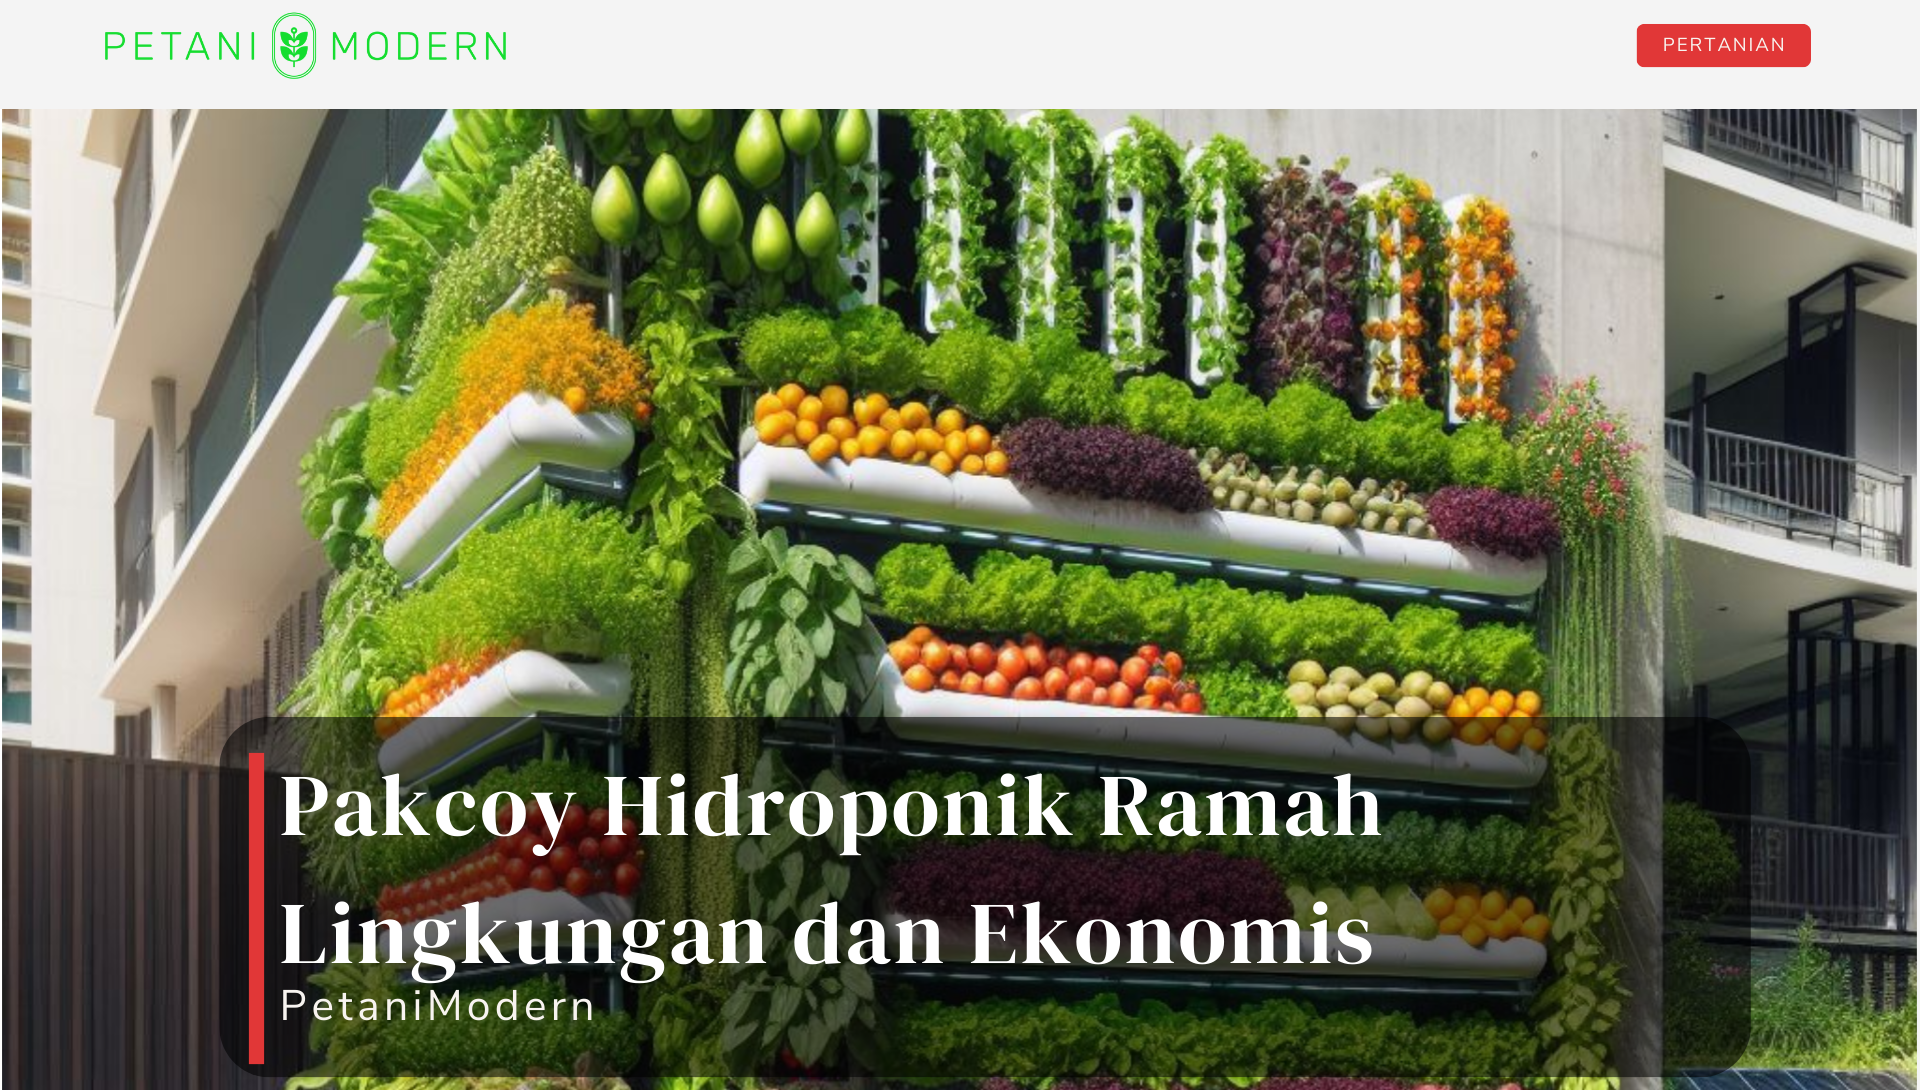 Pakcoy Hidroponik Ramah Lingkungan dan Ekonomis